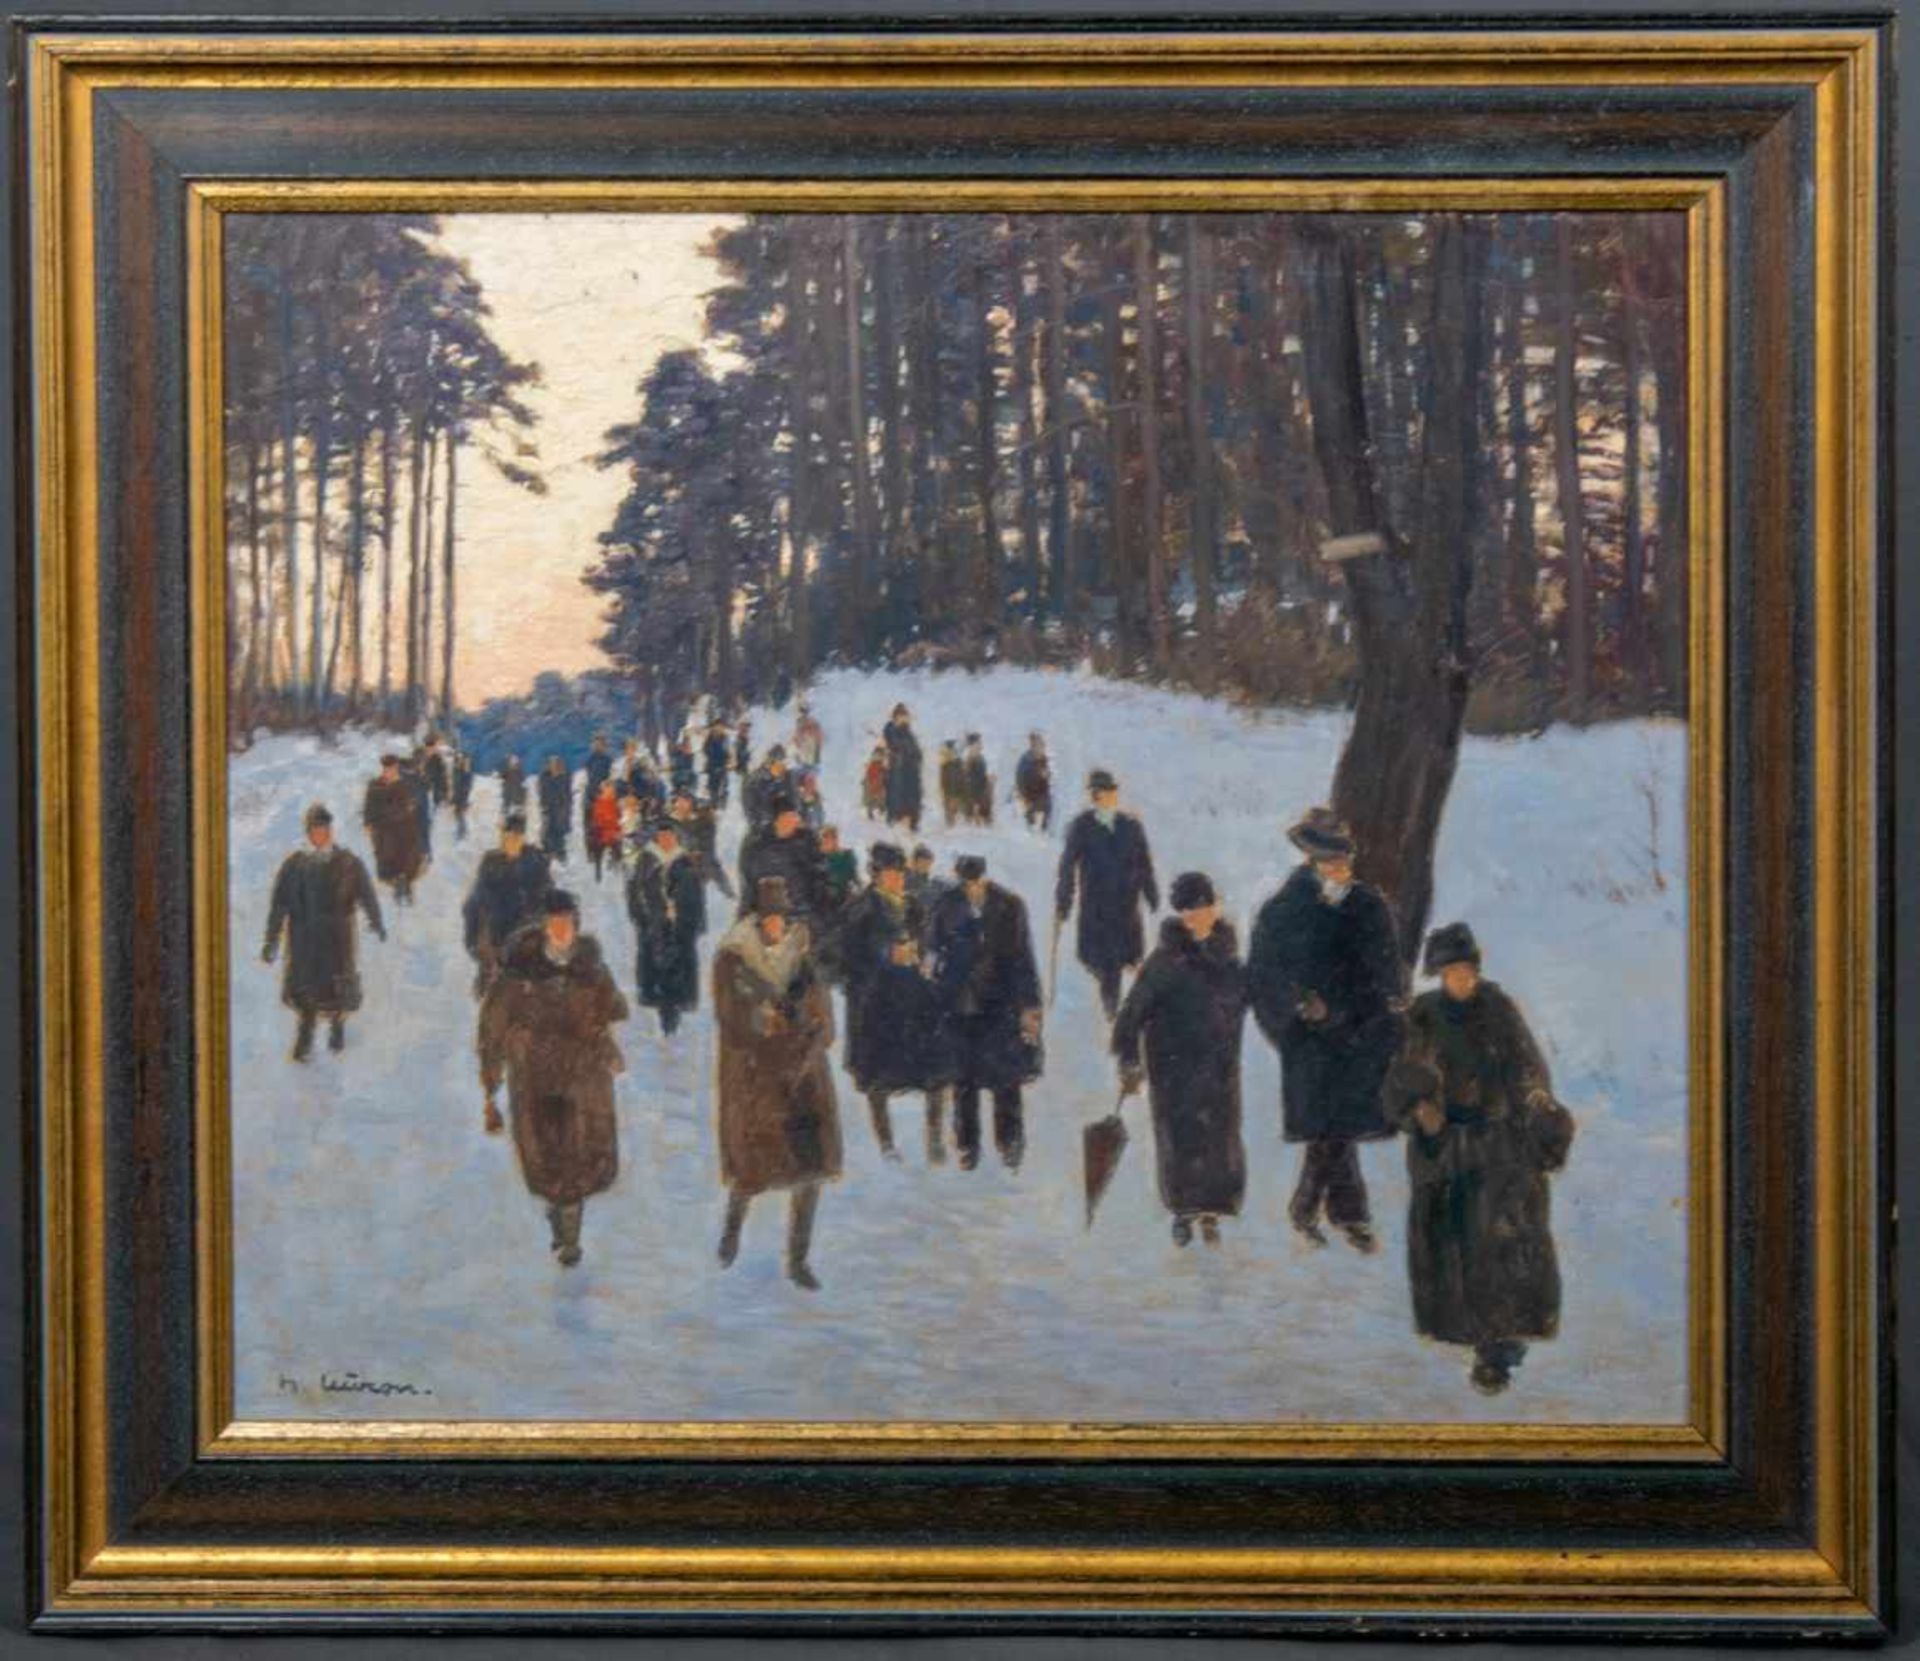 "Wald-Spaziergang" im Schnee, vielfigurige Szenerie, Anfang 20. Jhd., ca. 50 x 60 cm, Gemälde, Öl